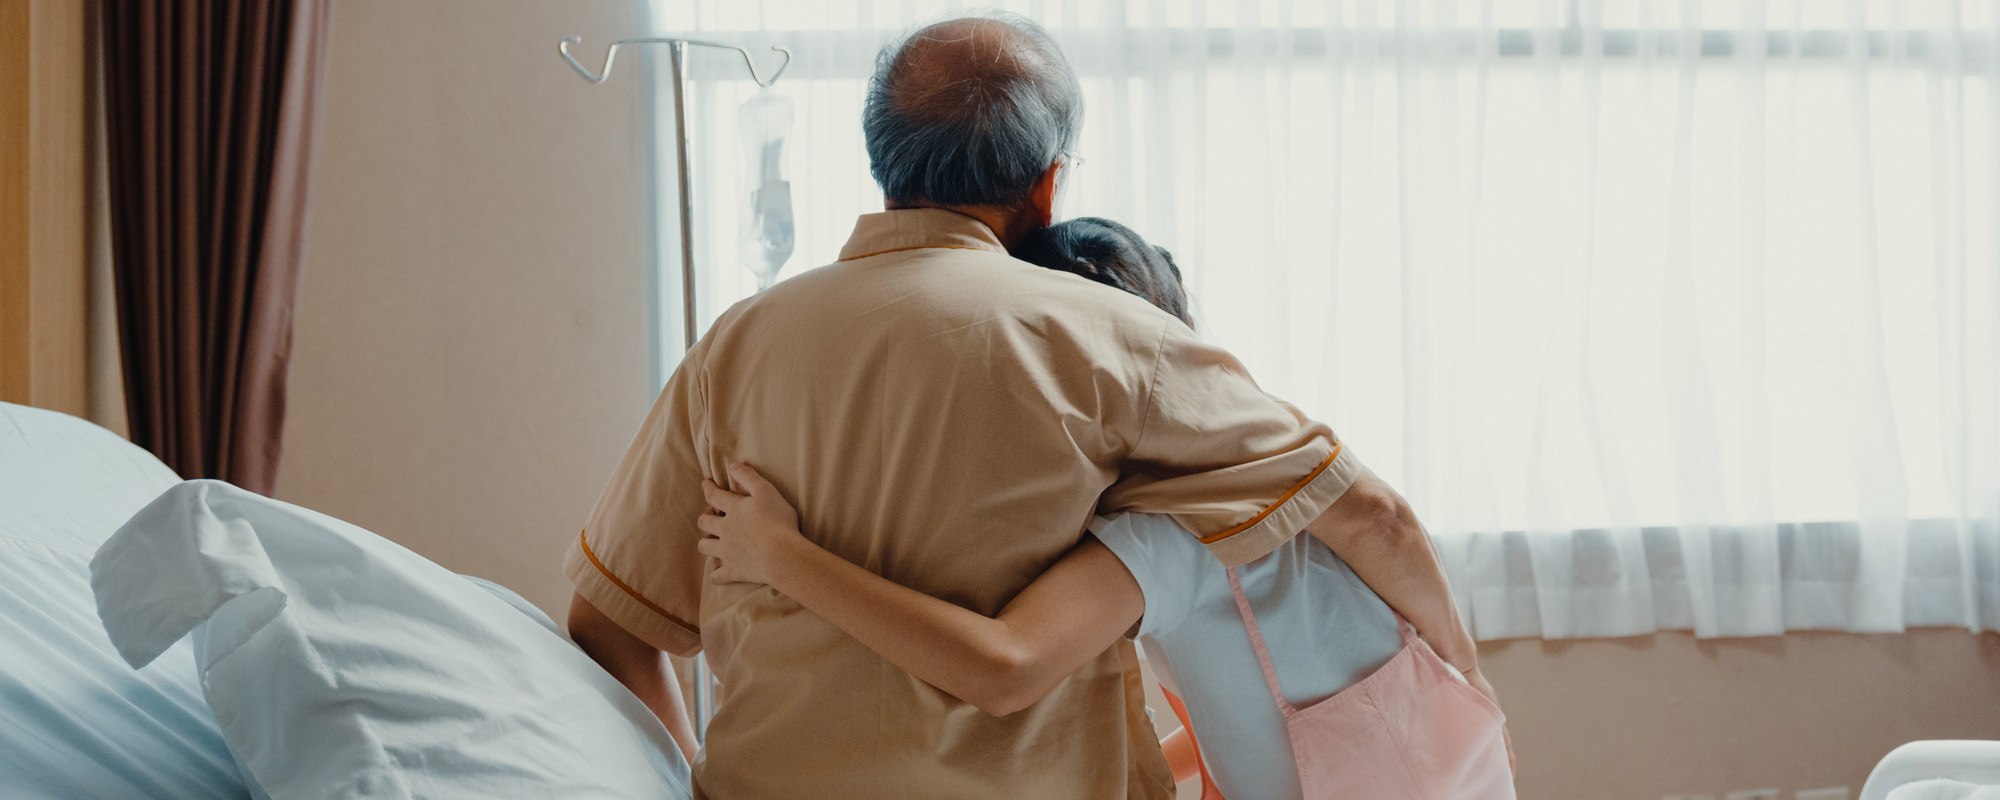 girl Asian granddaughter visiting hug sick senior grandfather